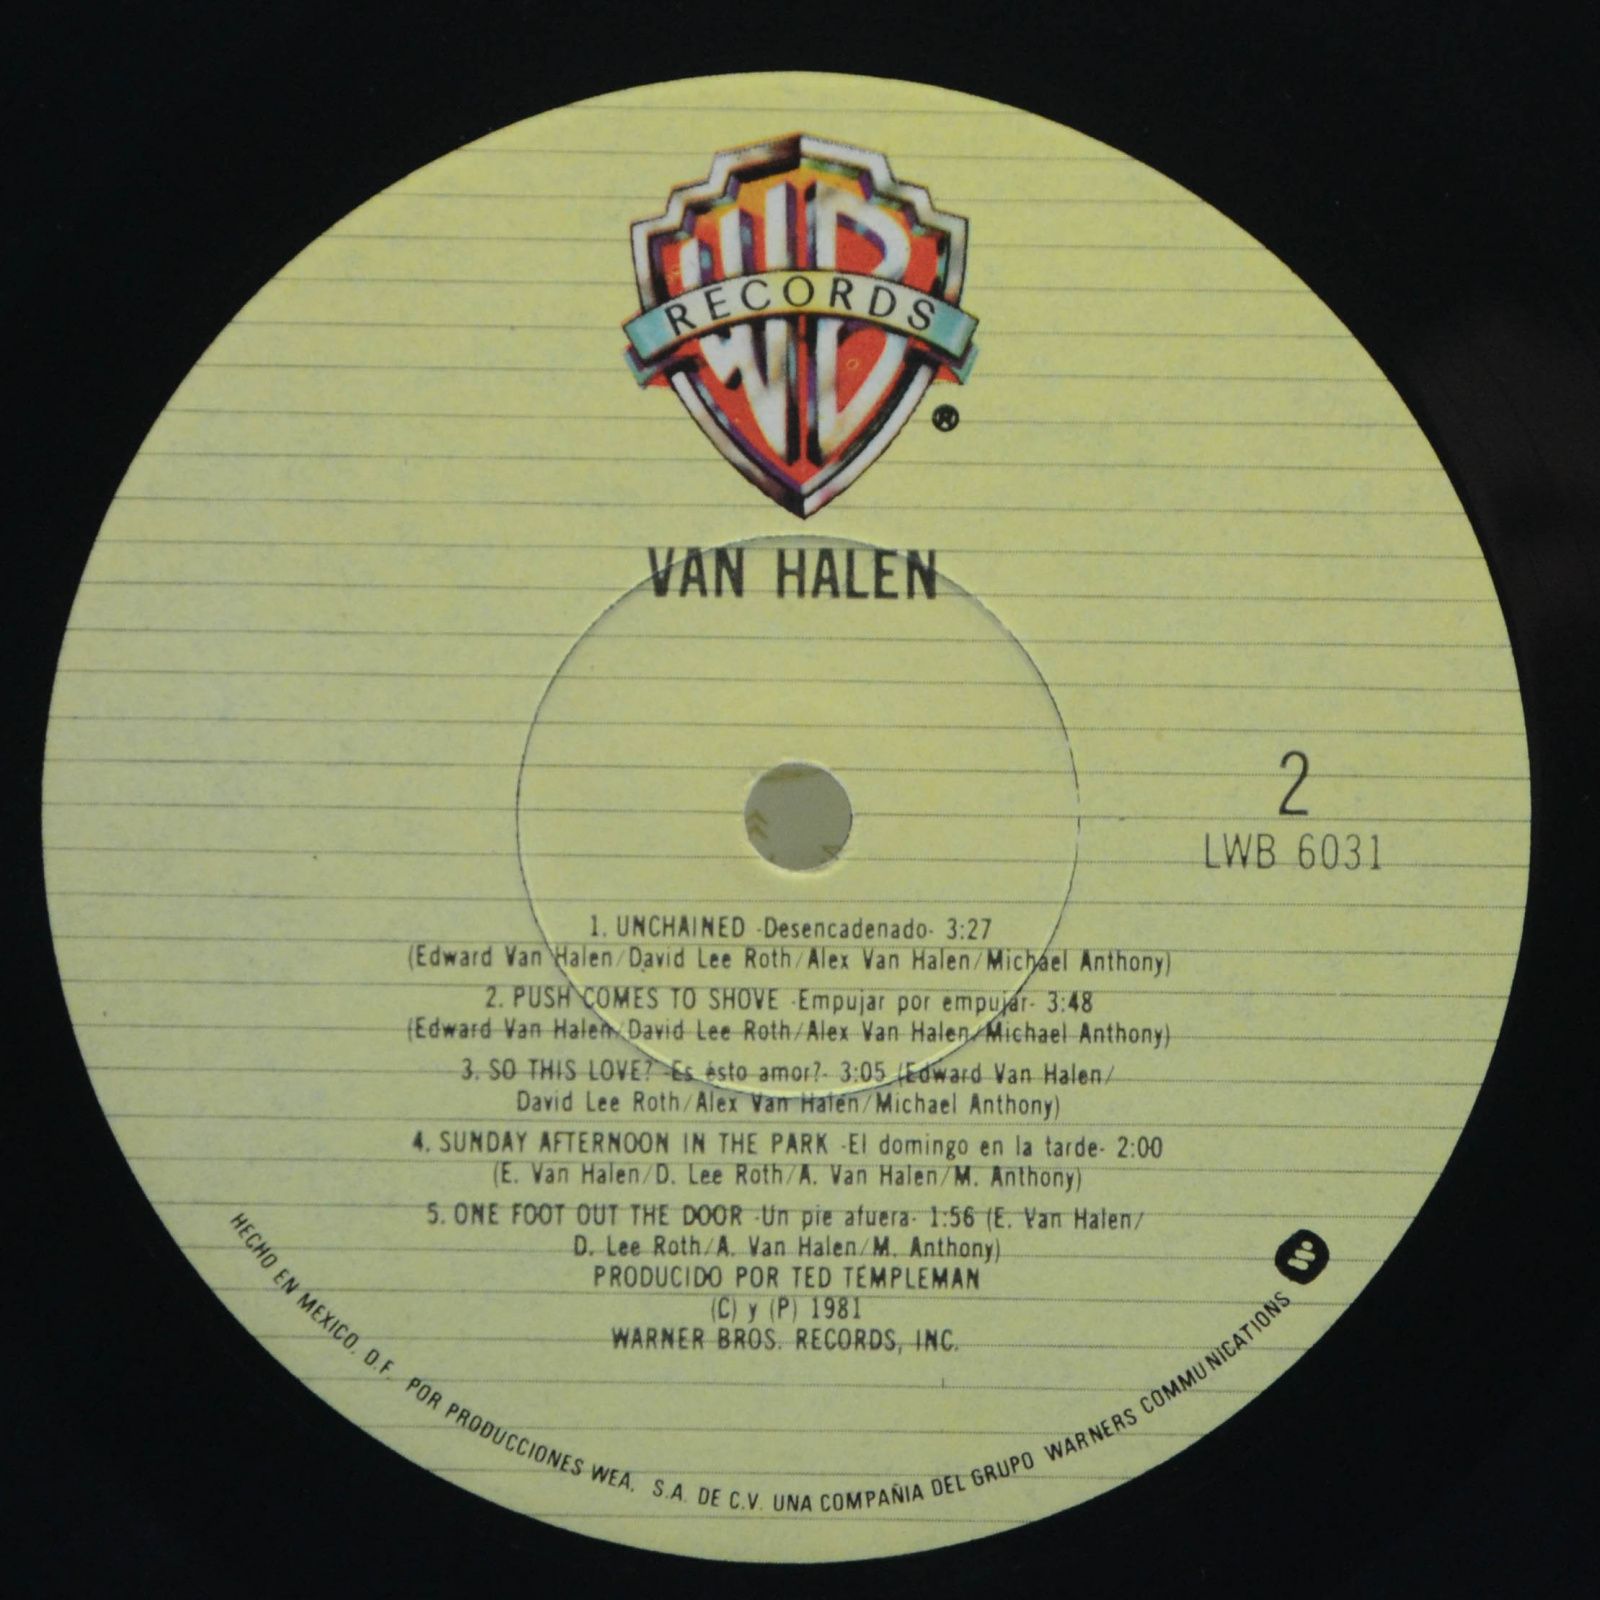 Van Halen — Fair Warning, 1981